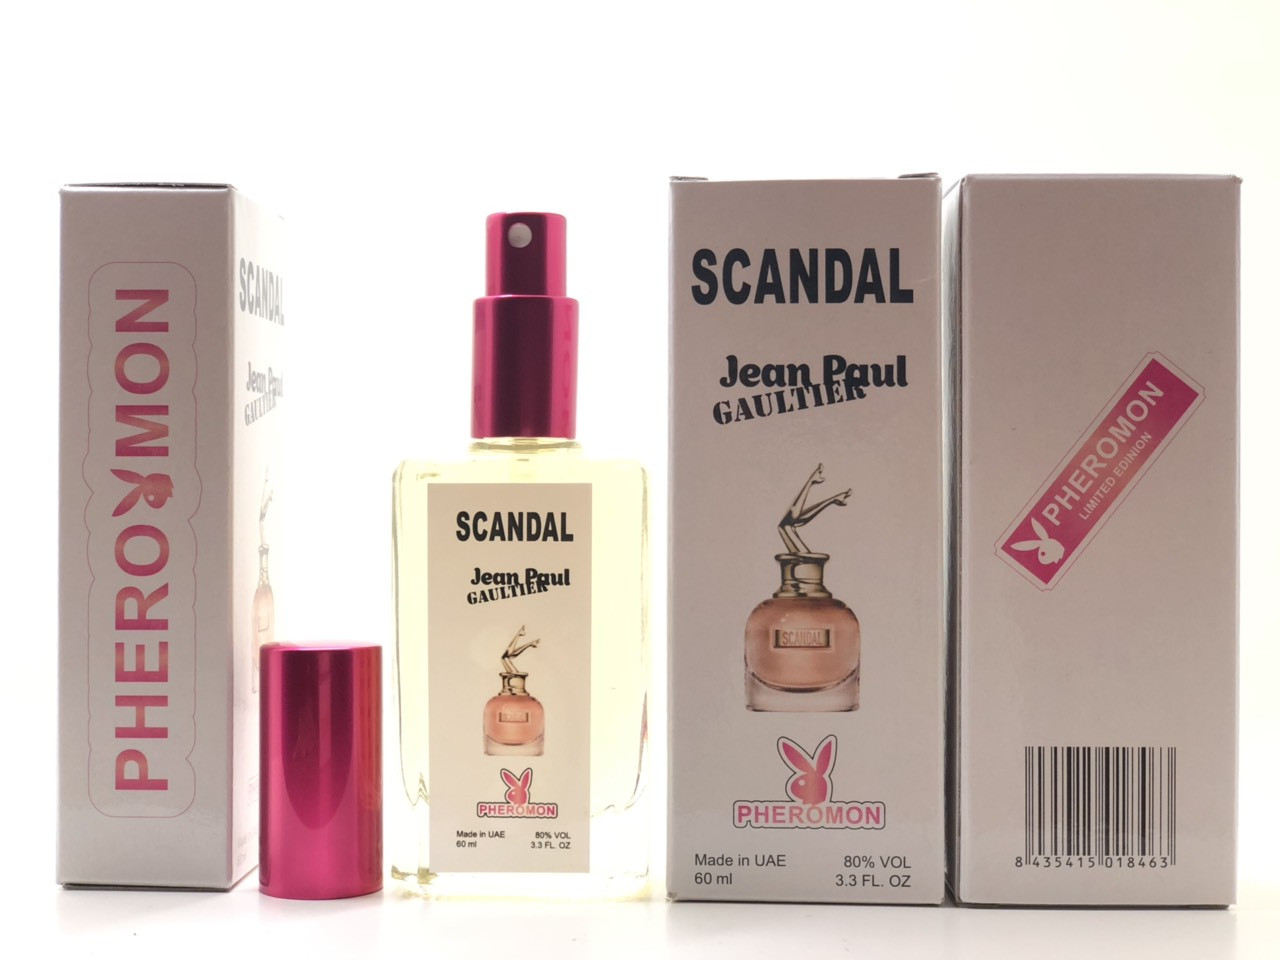 Жіночий аромат Jean Paul Gaultier Scandal (Жан Поль Готьє Скандал) з феромоном 60 мл